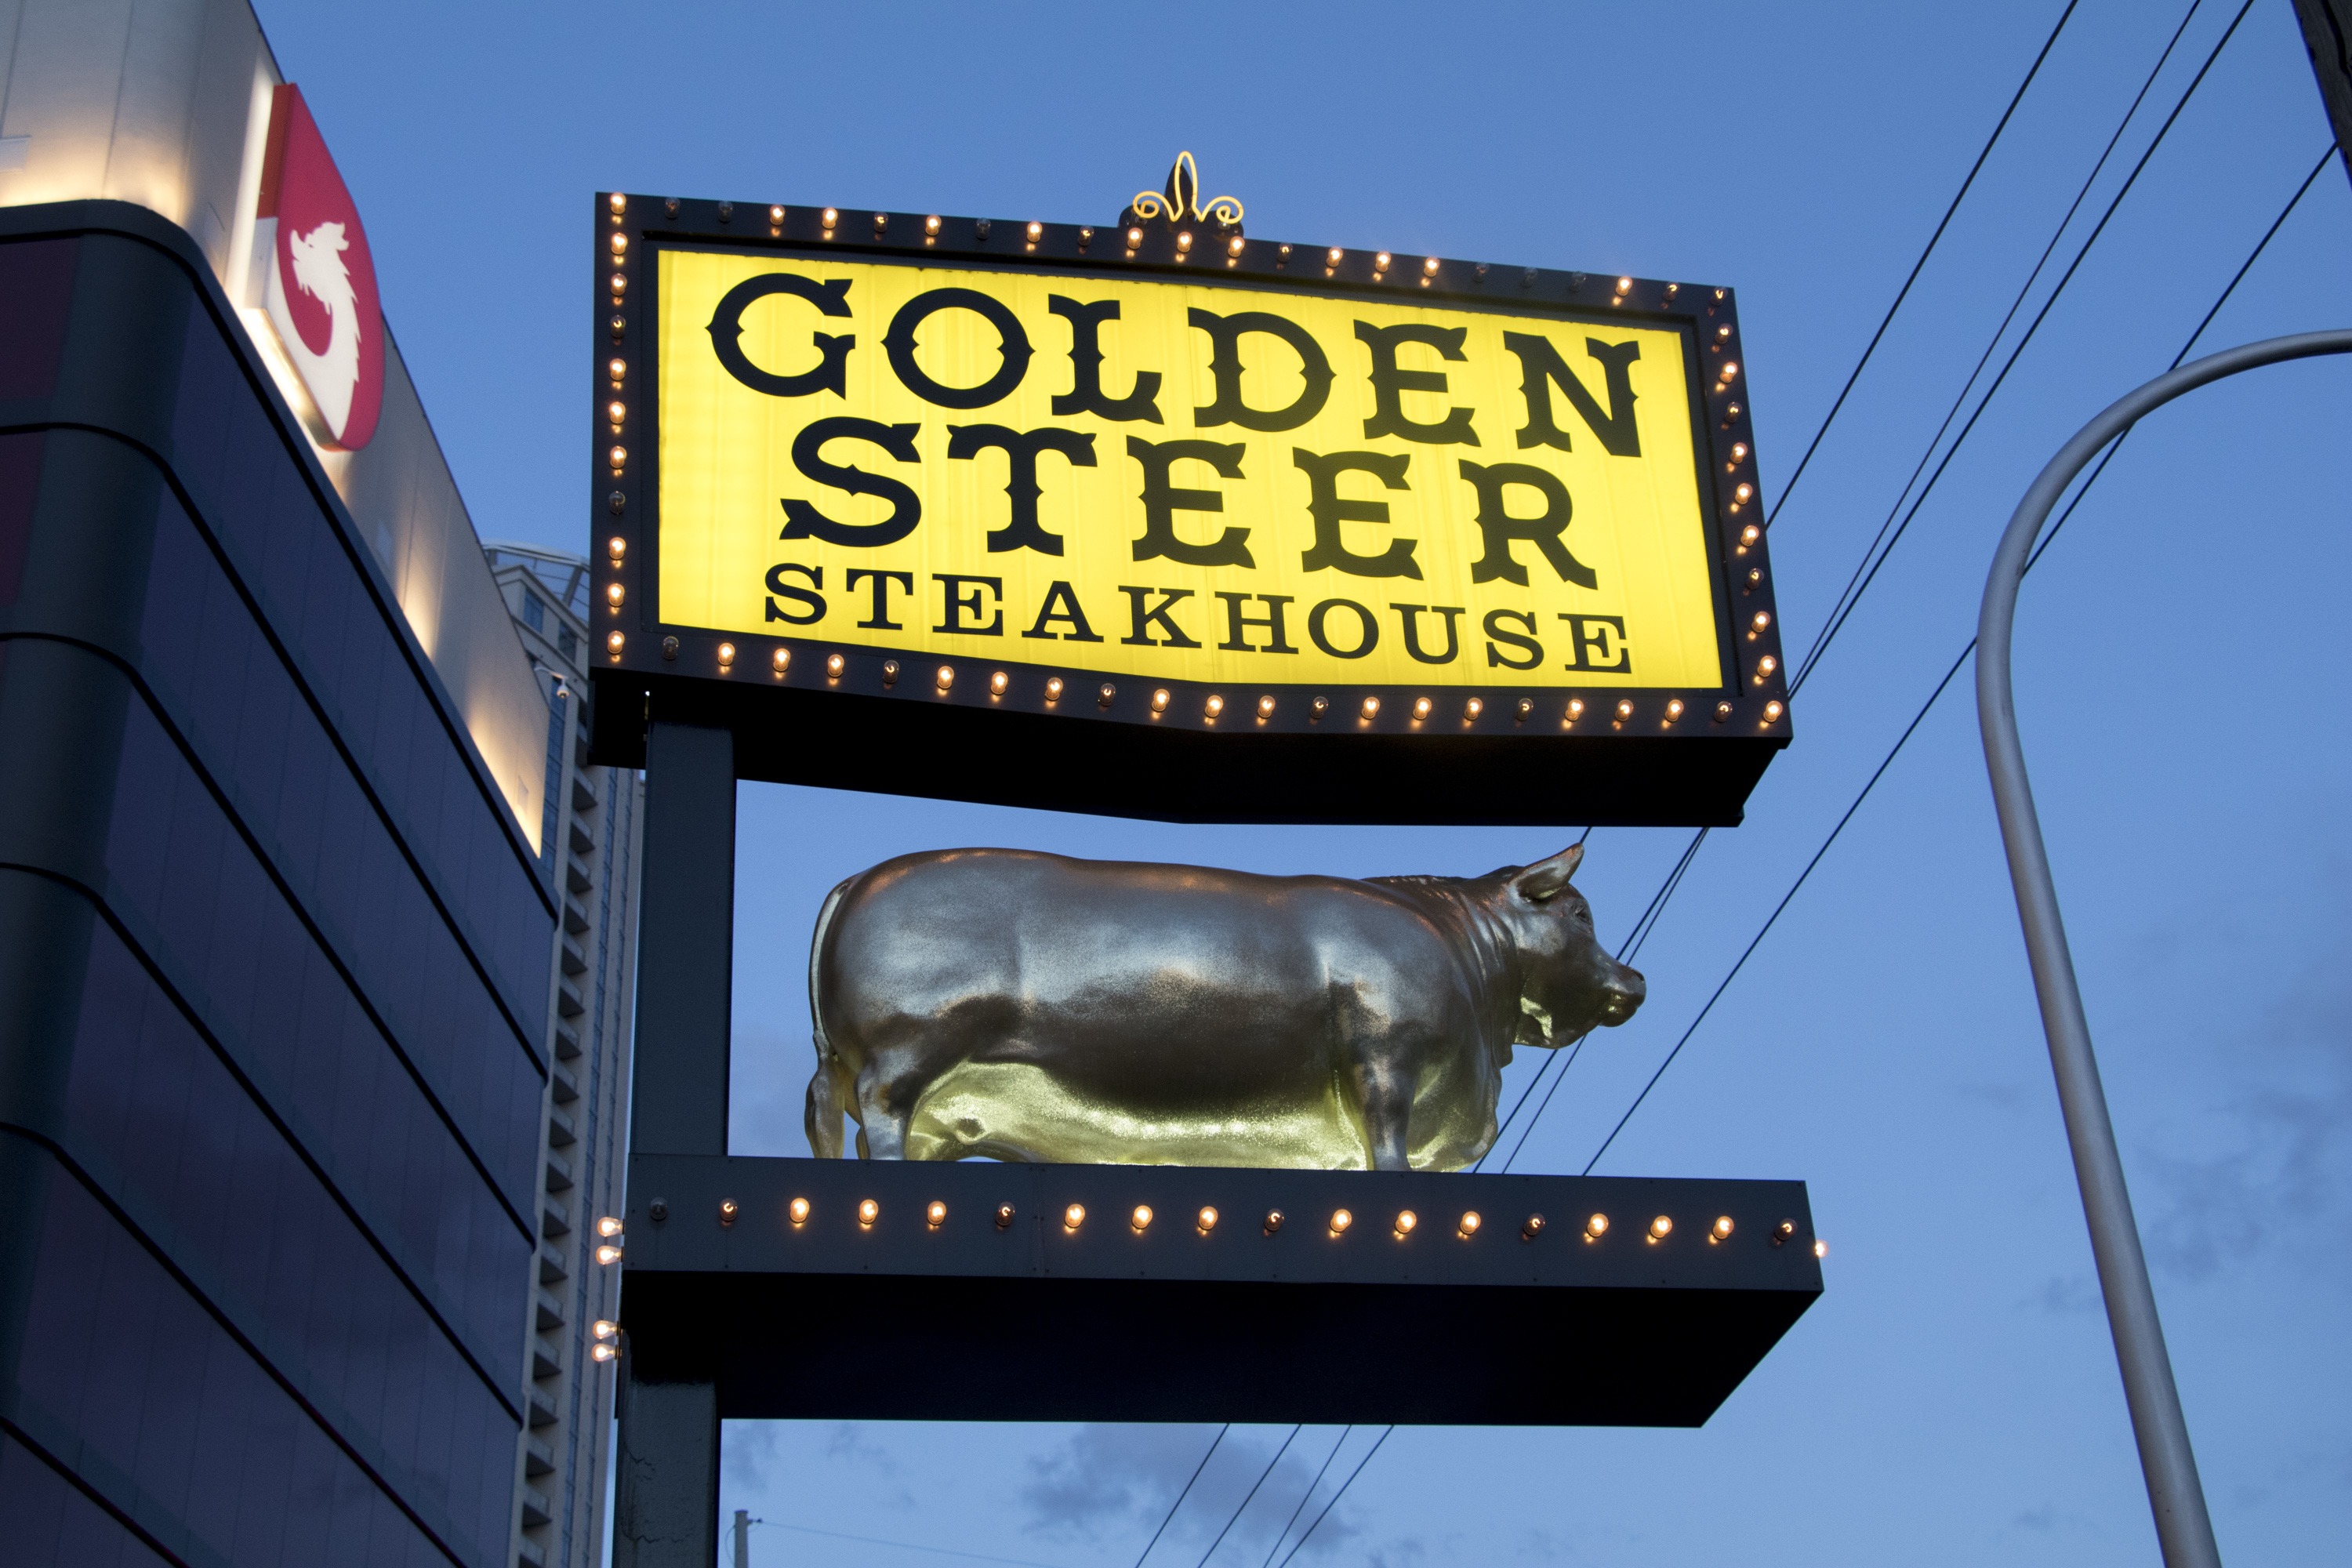 Photographs of Golden Steer Steakhouse sign, Las Vegas (Nev.), March 3, 2017